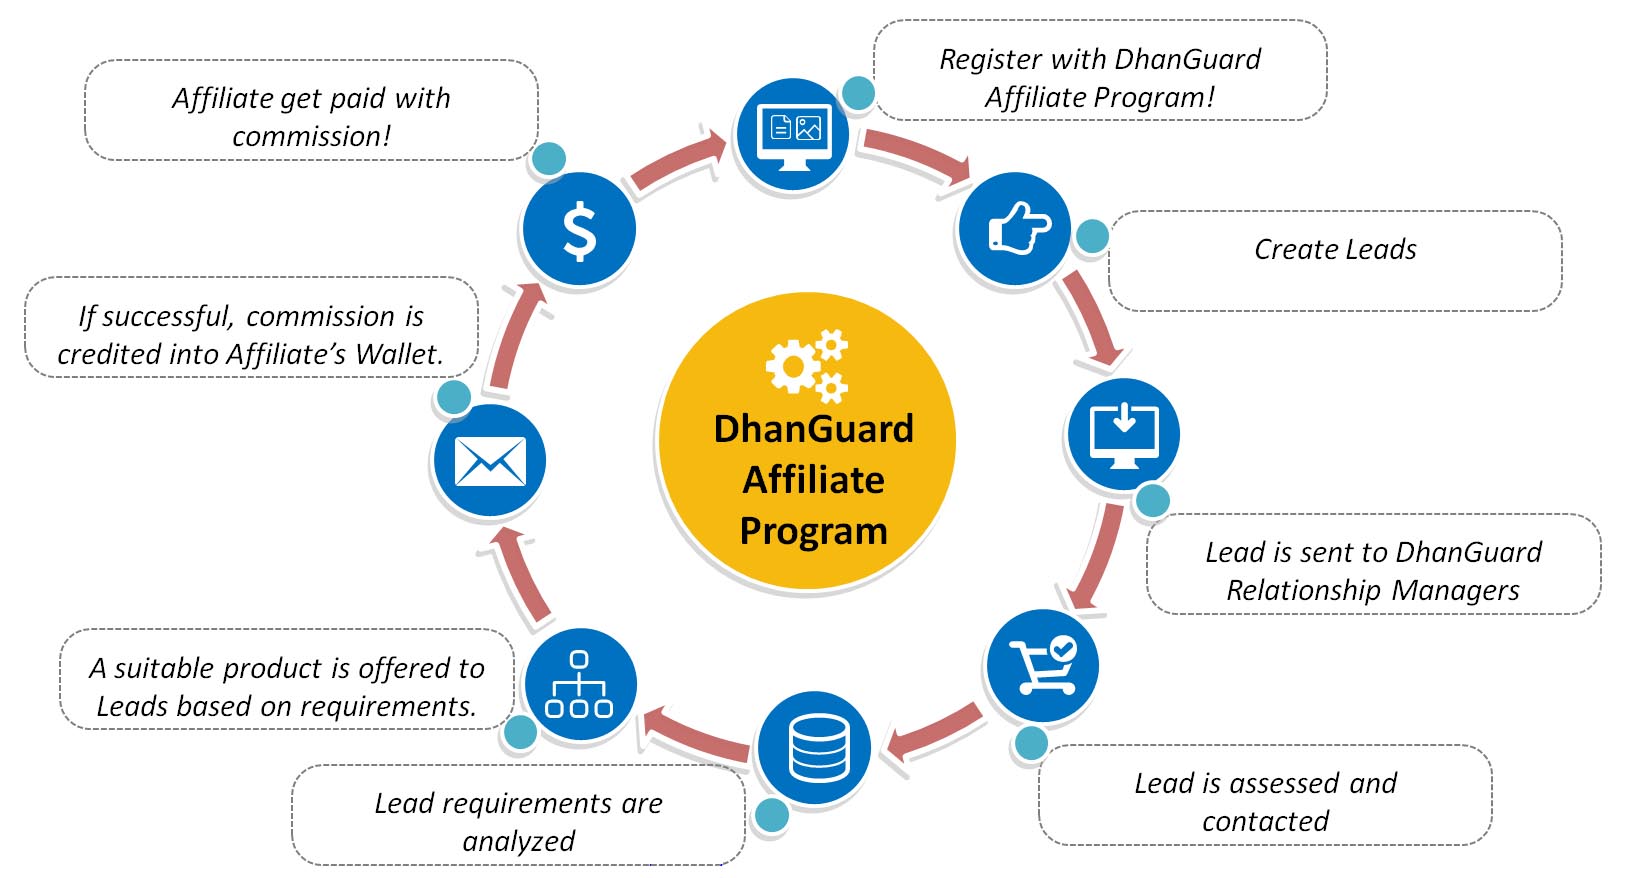 Dhanguard Affiliate Program